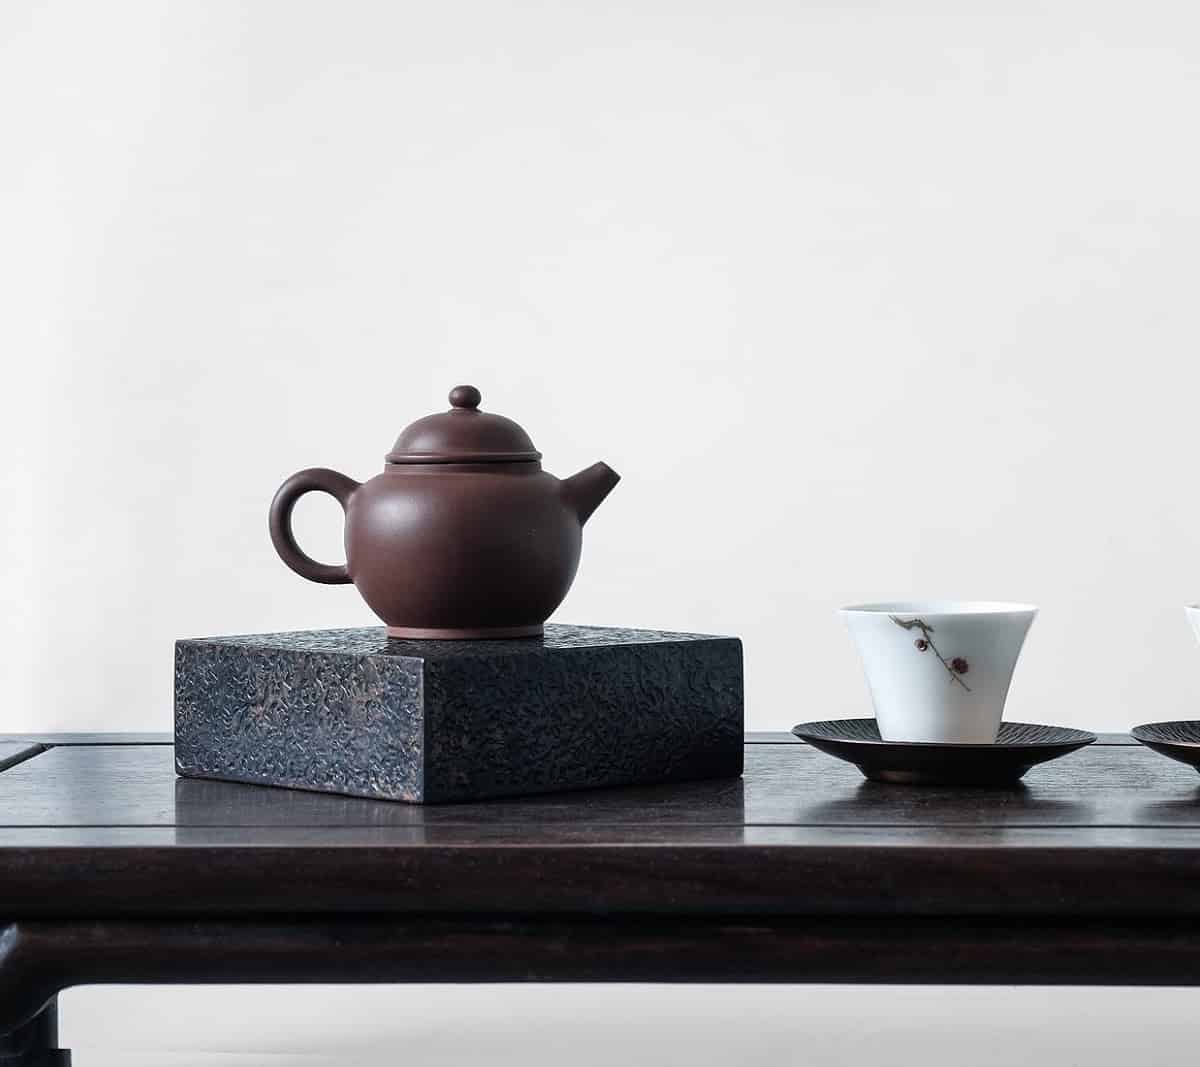 Explore Japanese Teapots in Chado